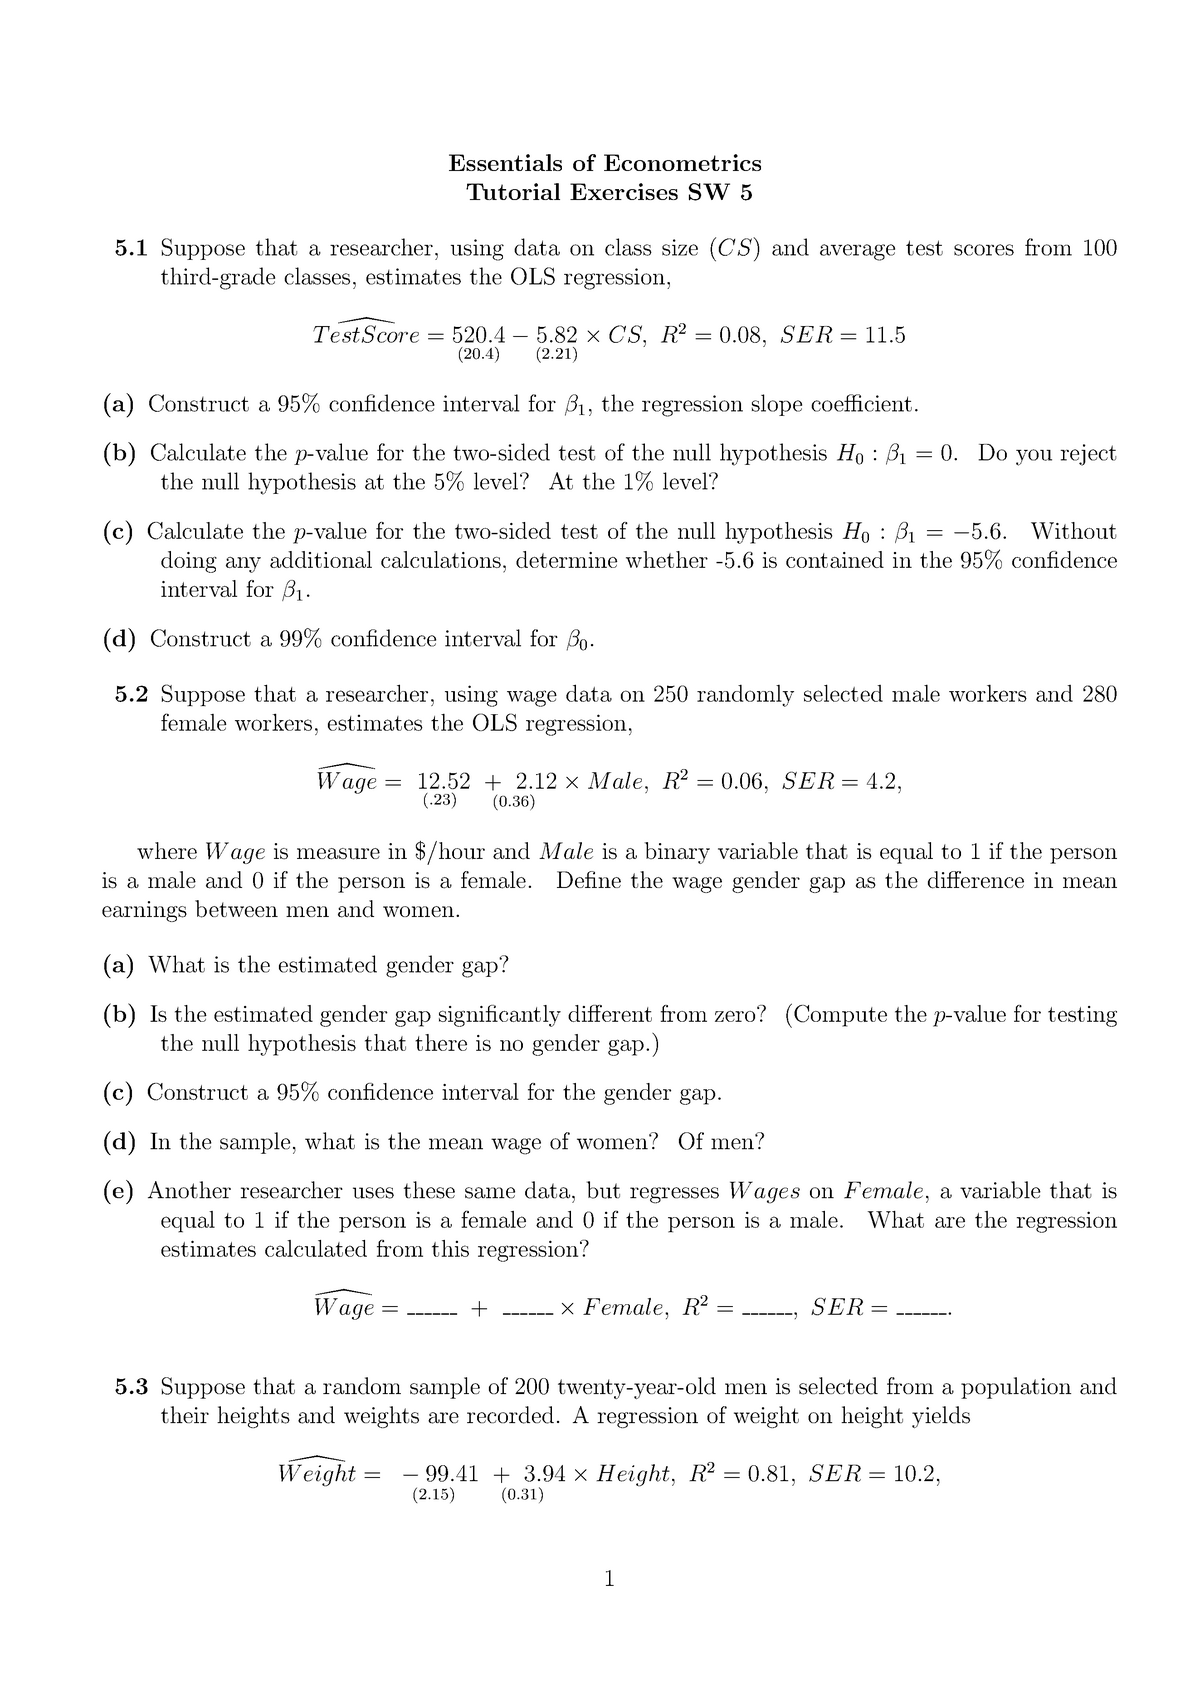 Essentials of Econometrics Tutorial 2 Questions - Essentials of ...